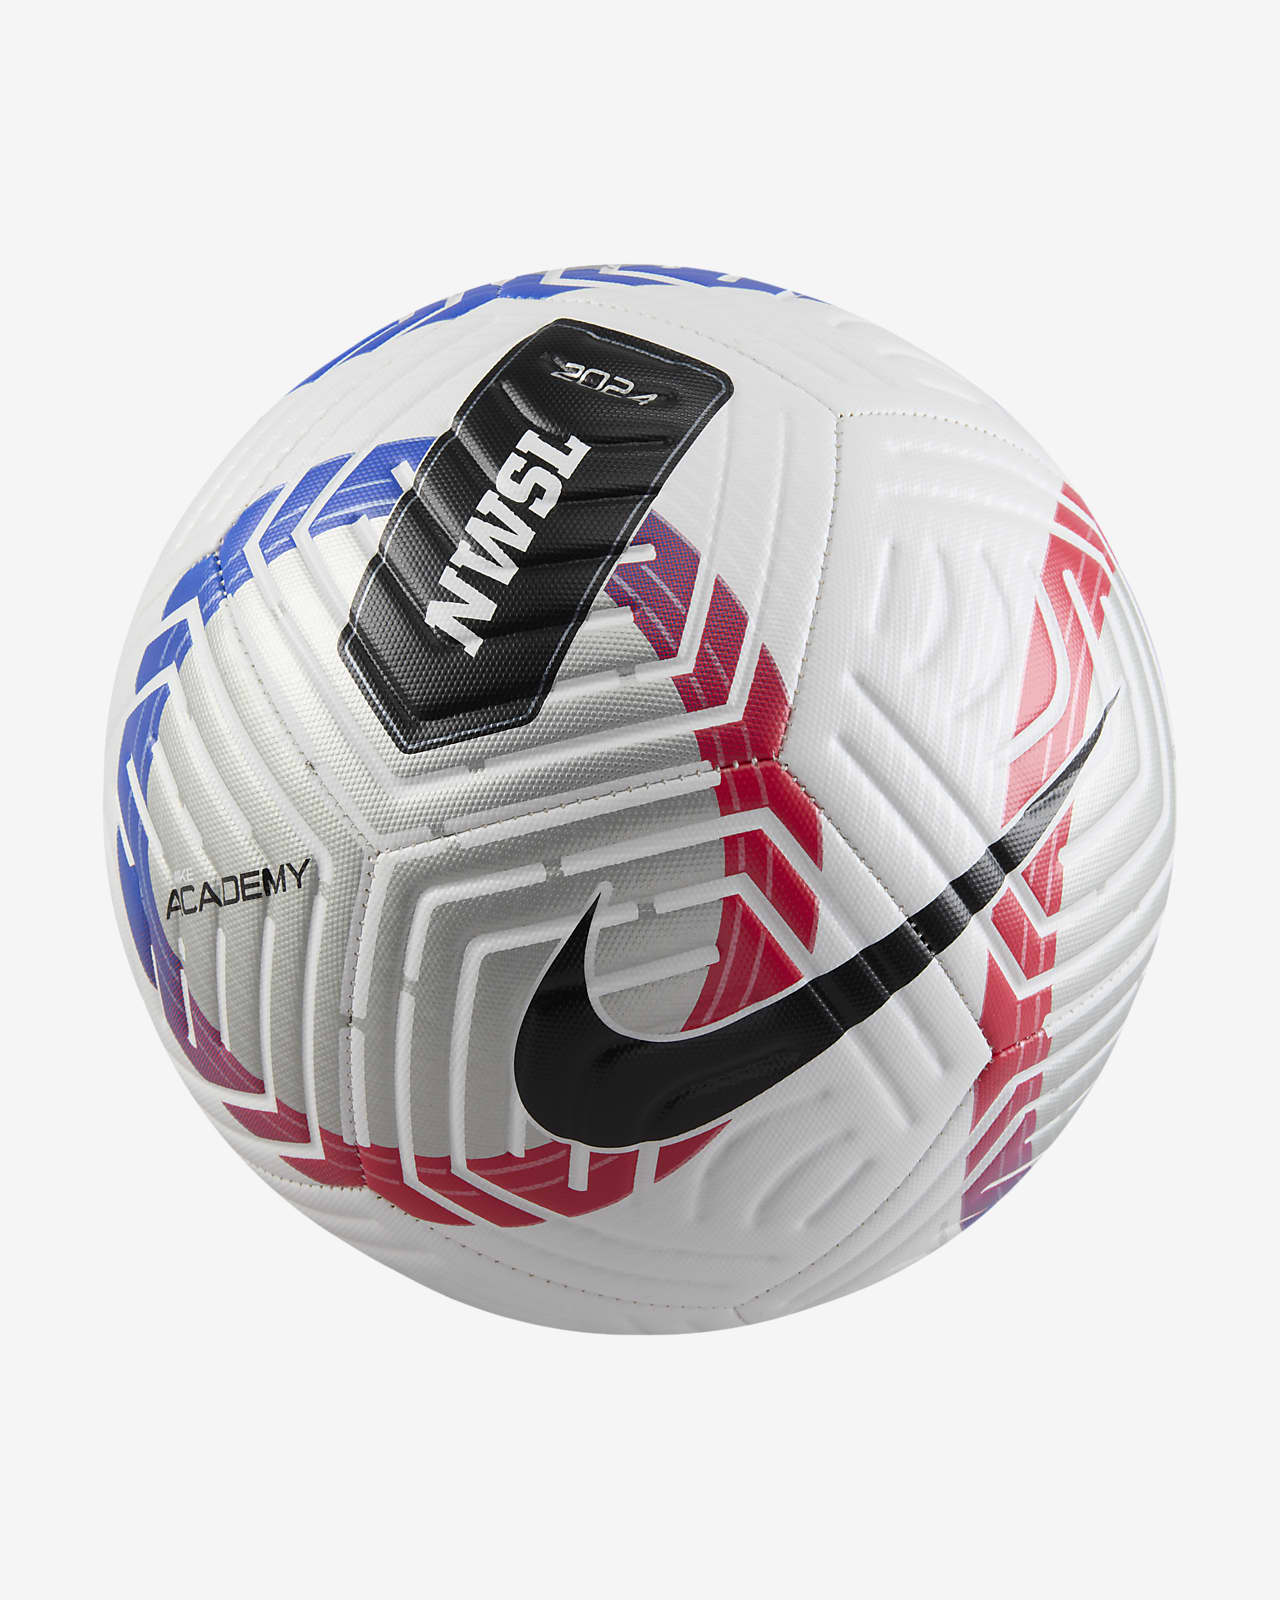 NWSL Academy Soccer Ball